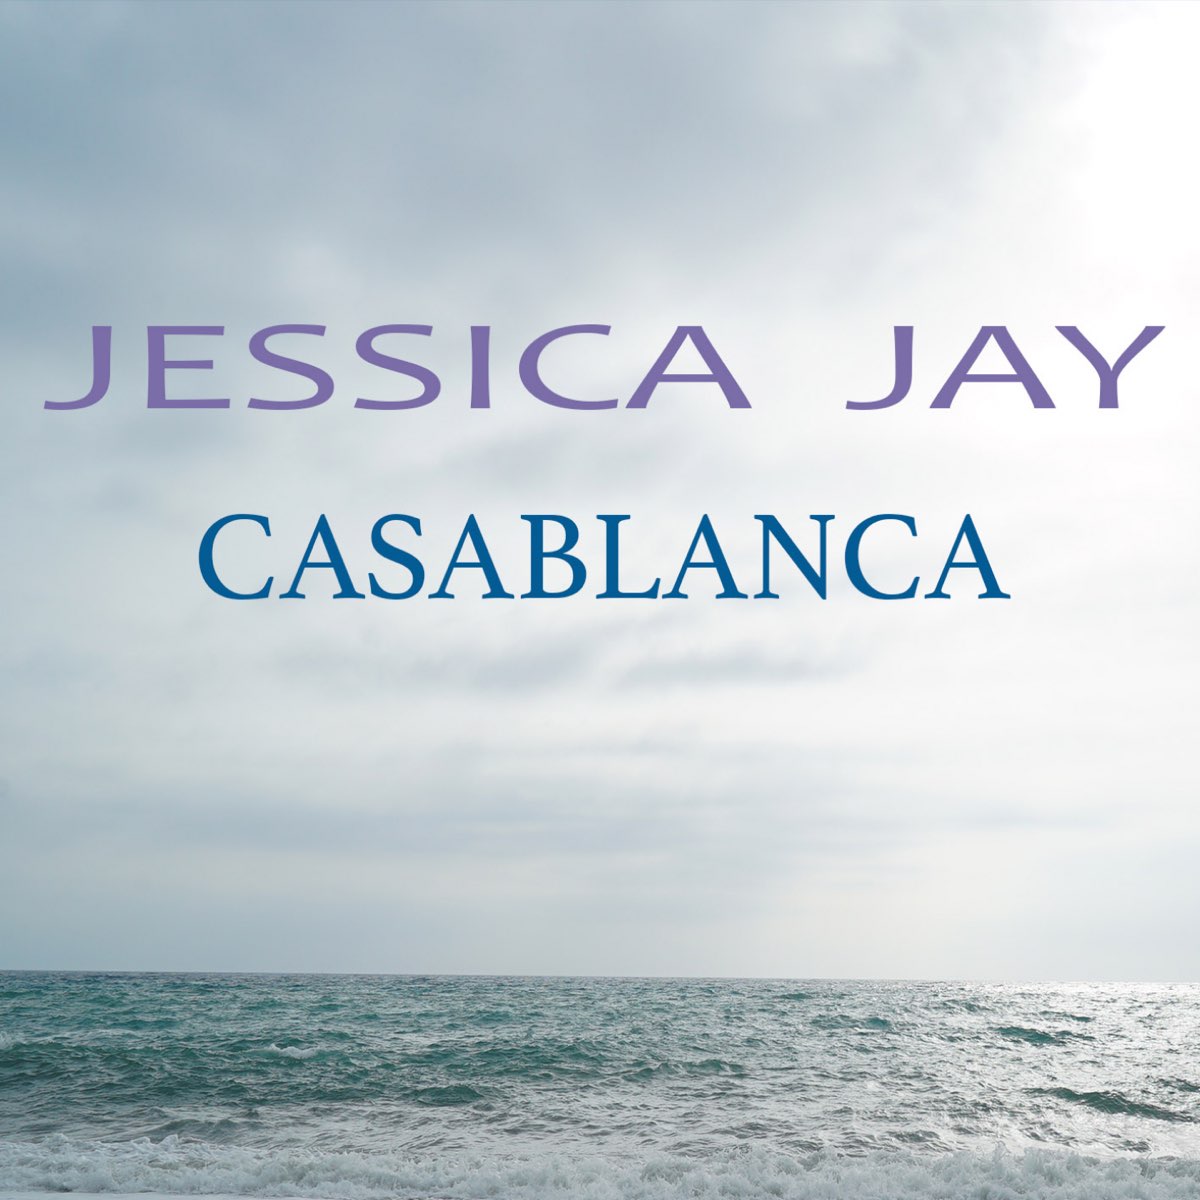 Jessica Jay Касабланка. Jessica Jay Casablanca альбом. Jessica Jay певица 90-х.